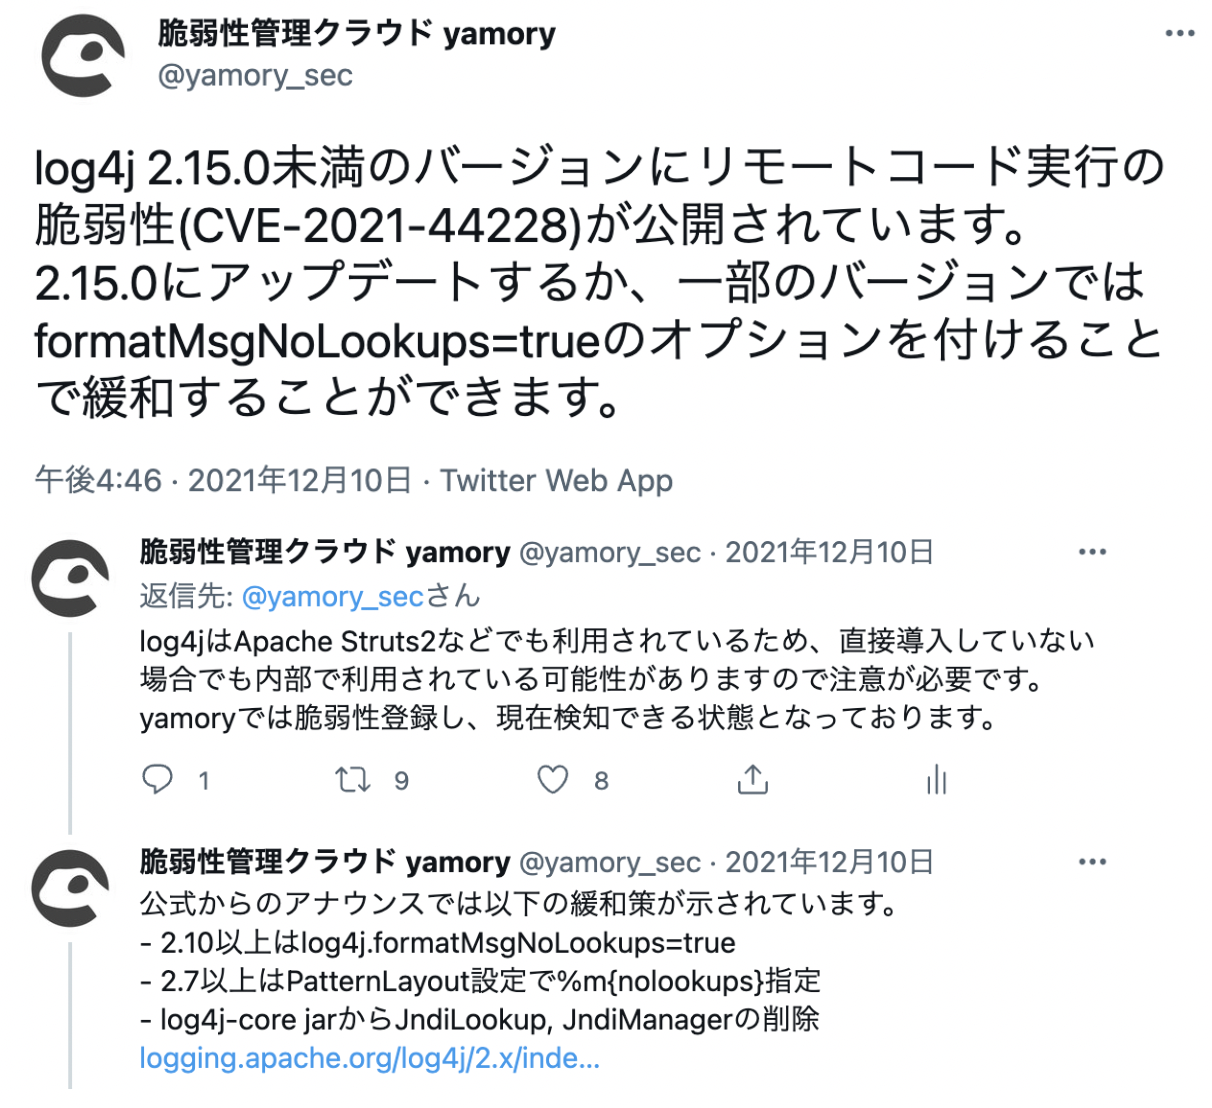 yamory による Log4Shell の注意喚起 Tweet